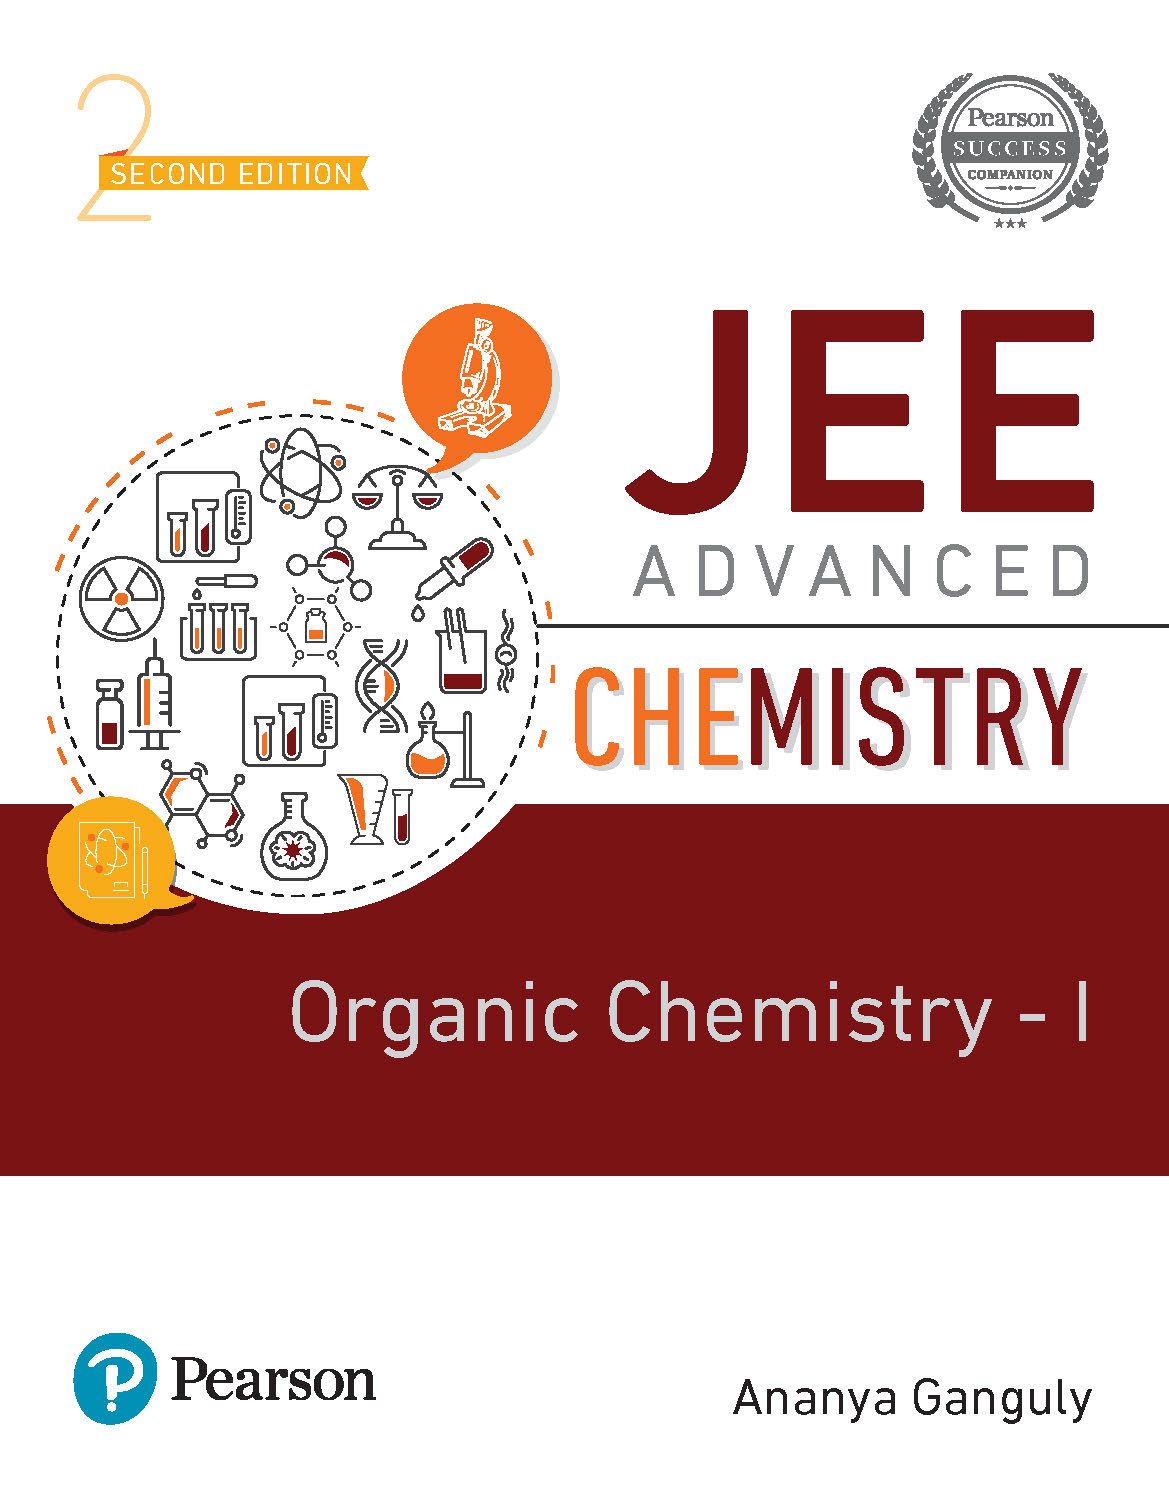     			JEE Advanced Chemistry - Organic Chemistry - I by Ananya Ganguly